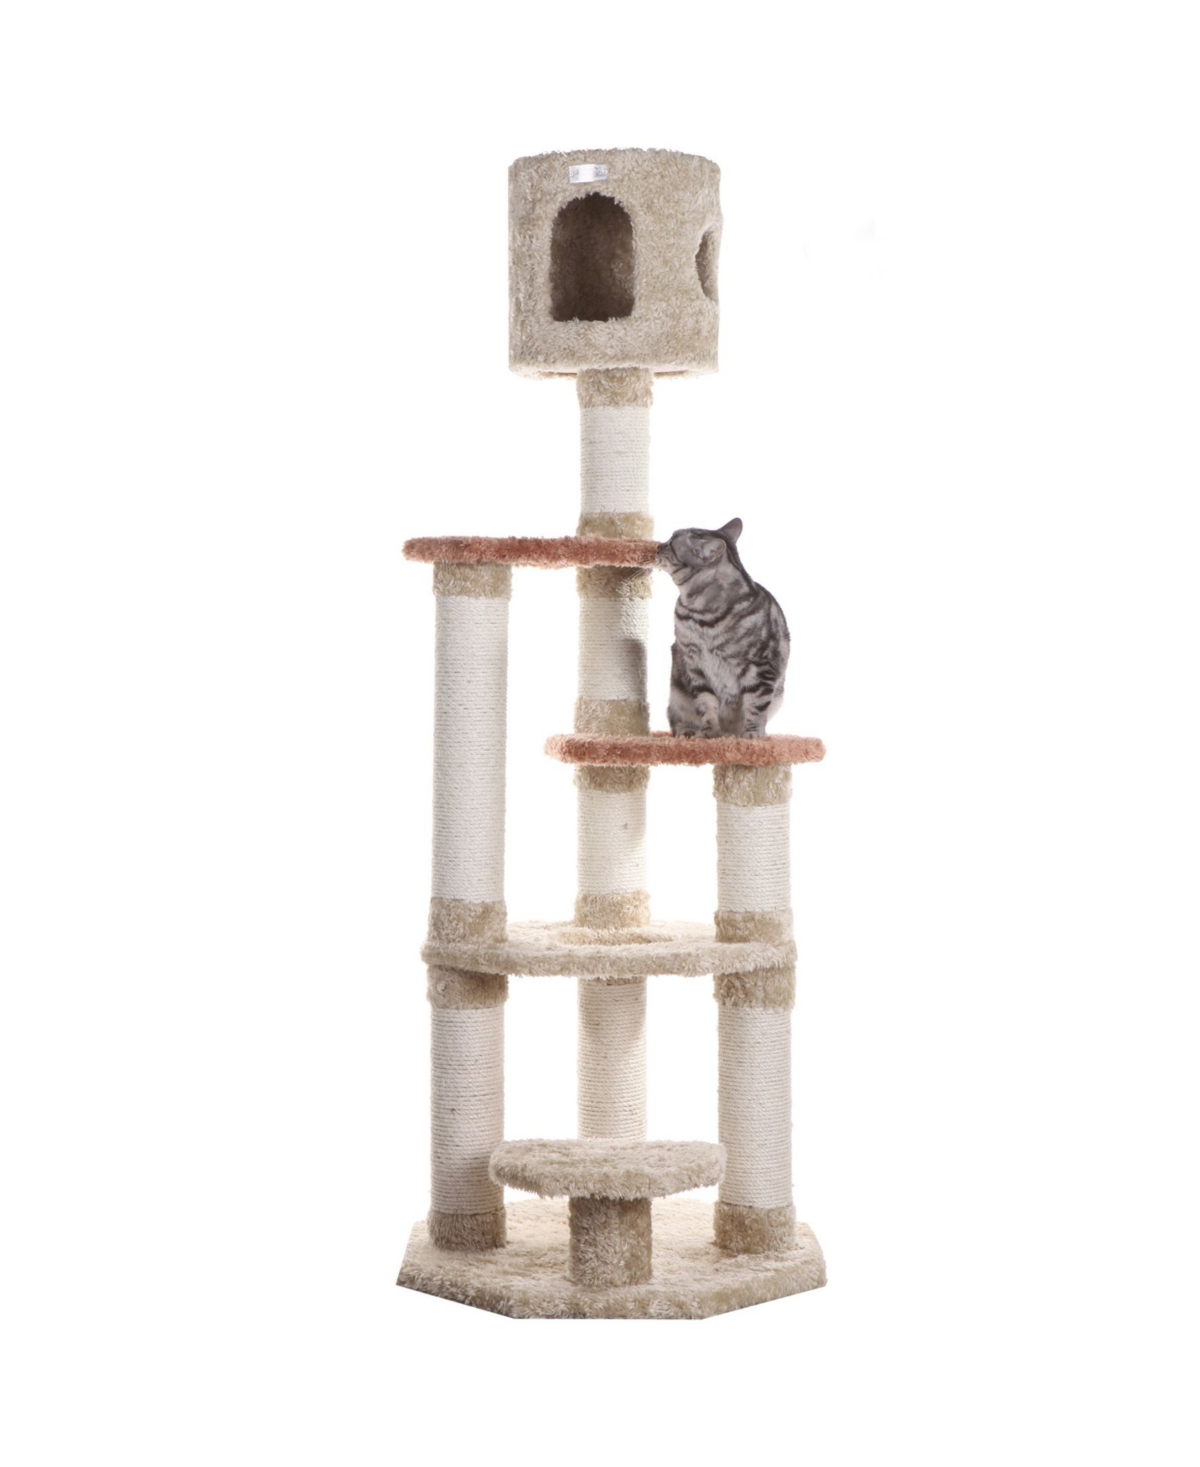 Real Wood Cat Climber, Cat Jungle Tree With Sisal Carpet Platforms - Khaki